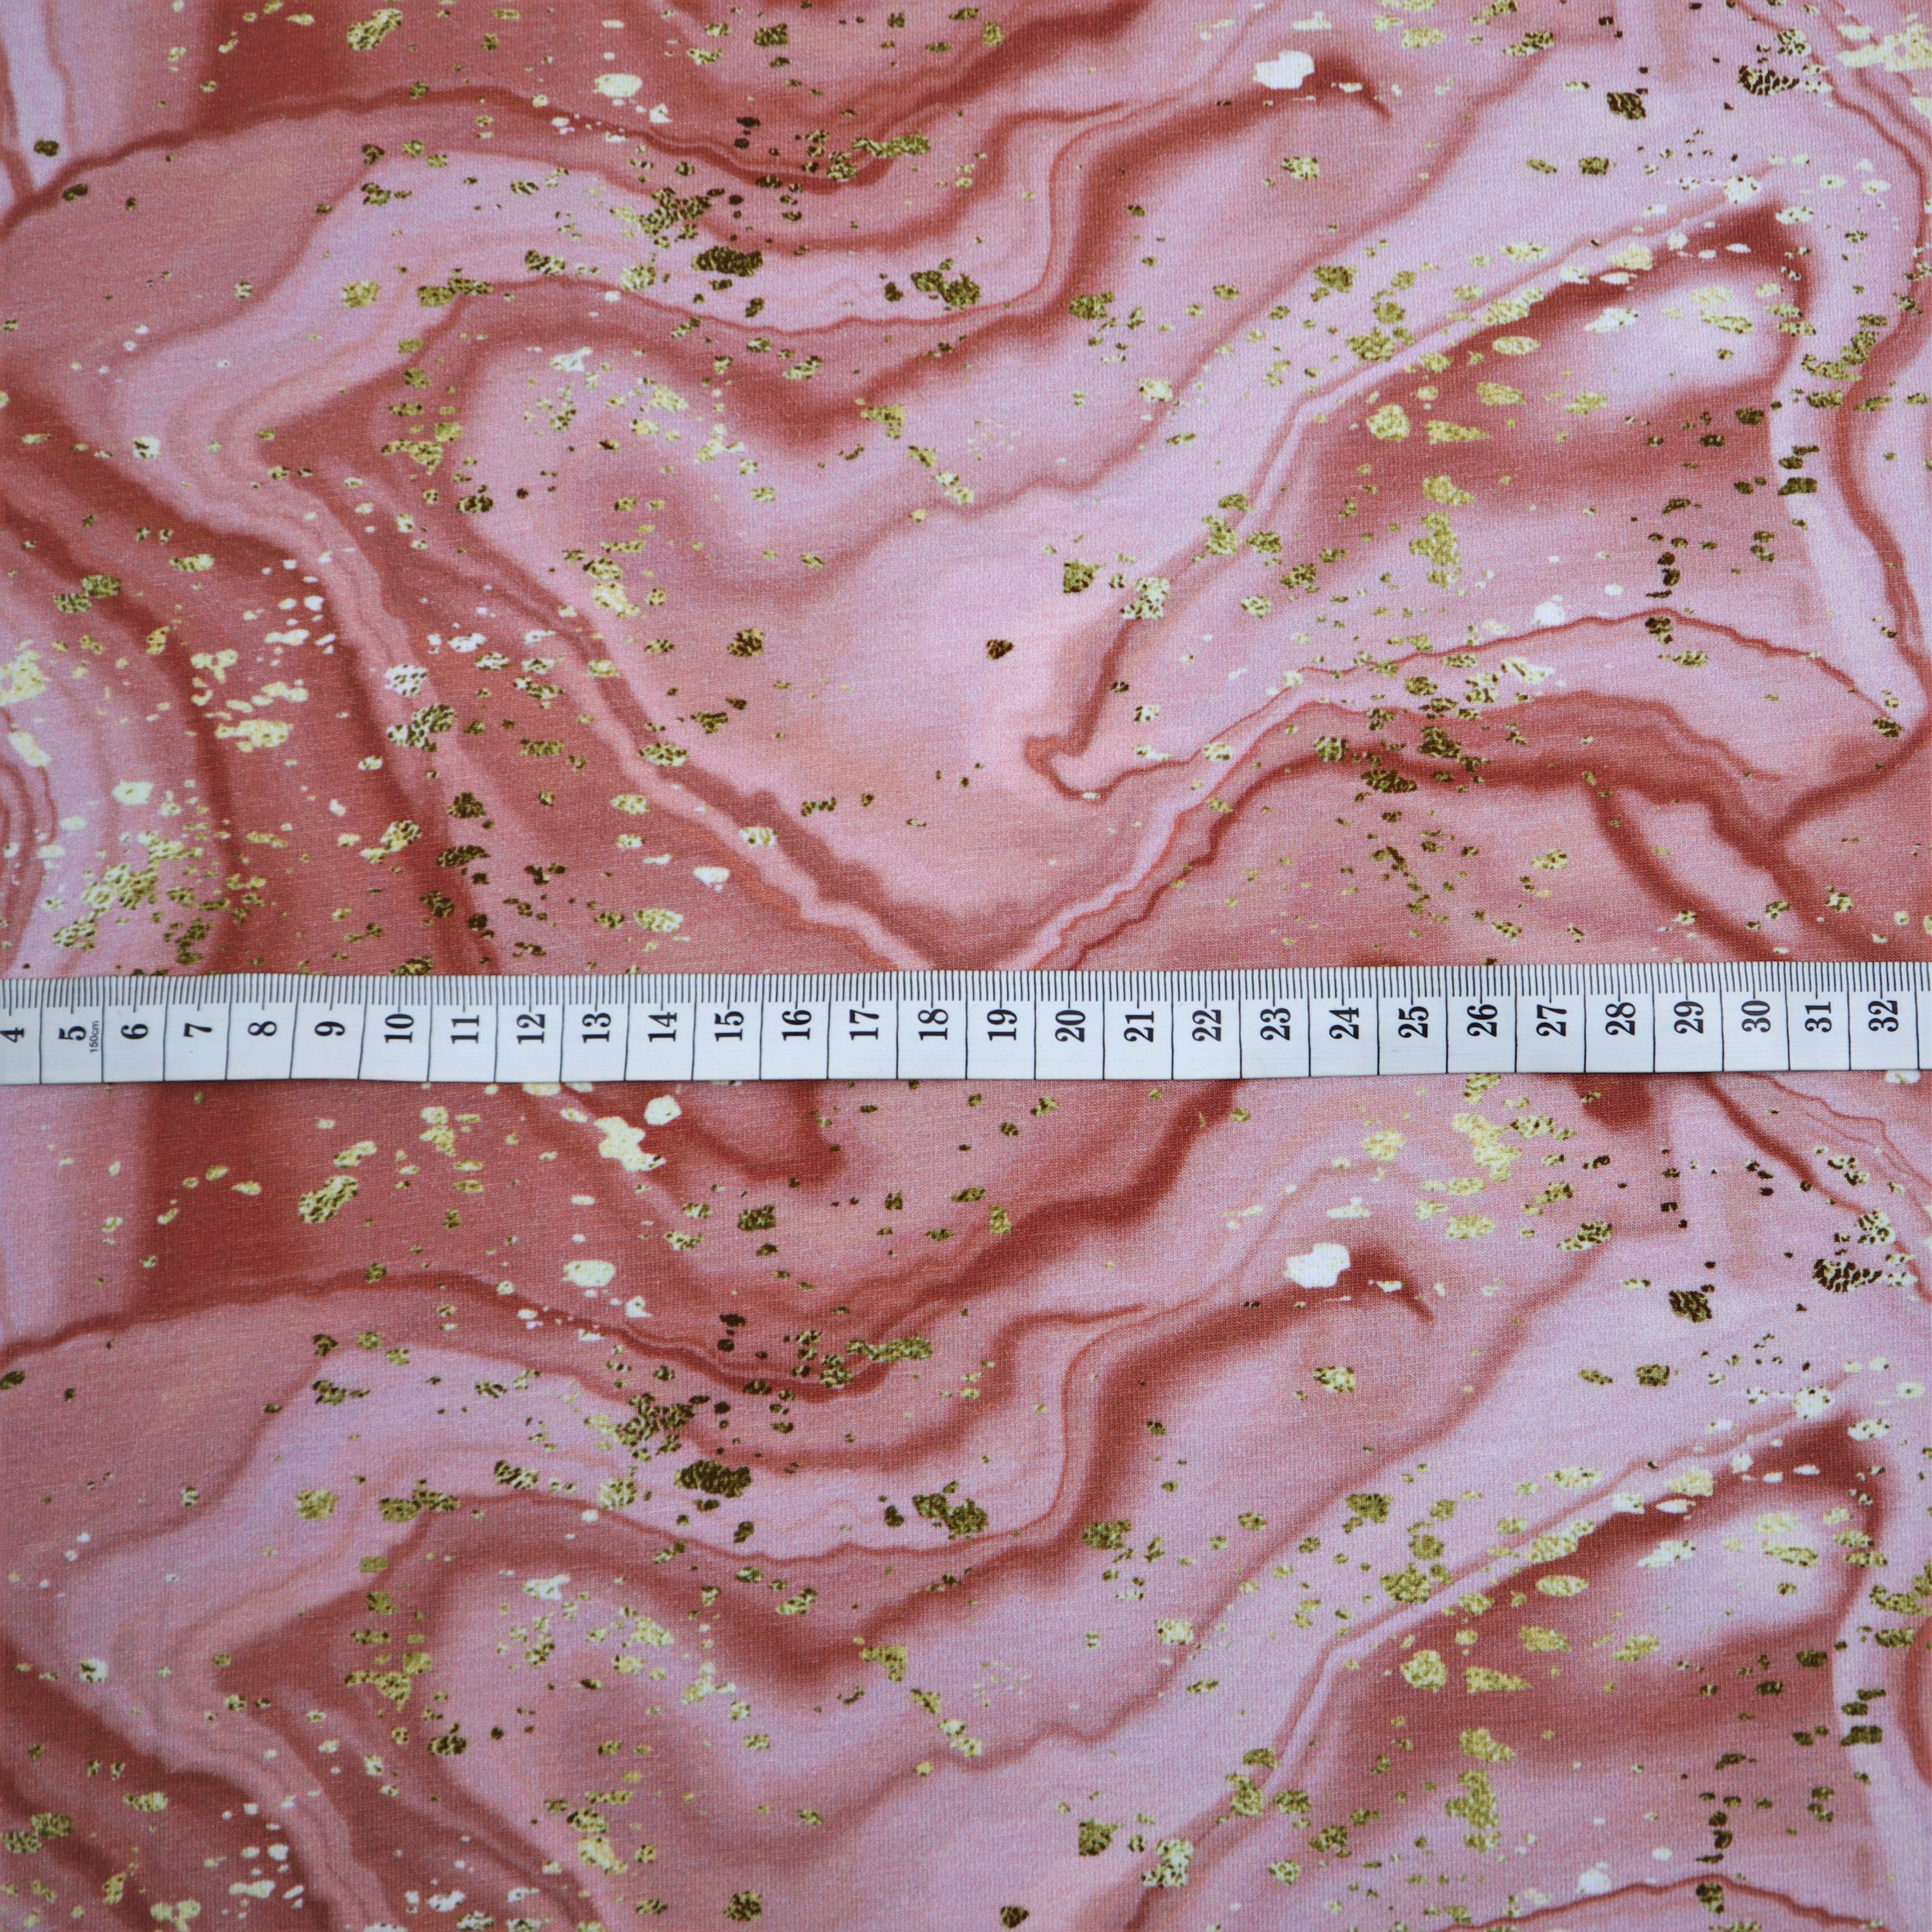 SALE Cotton Jersey in Liquid Marble Print